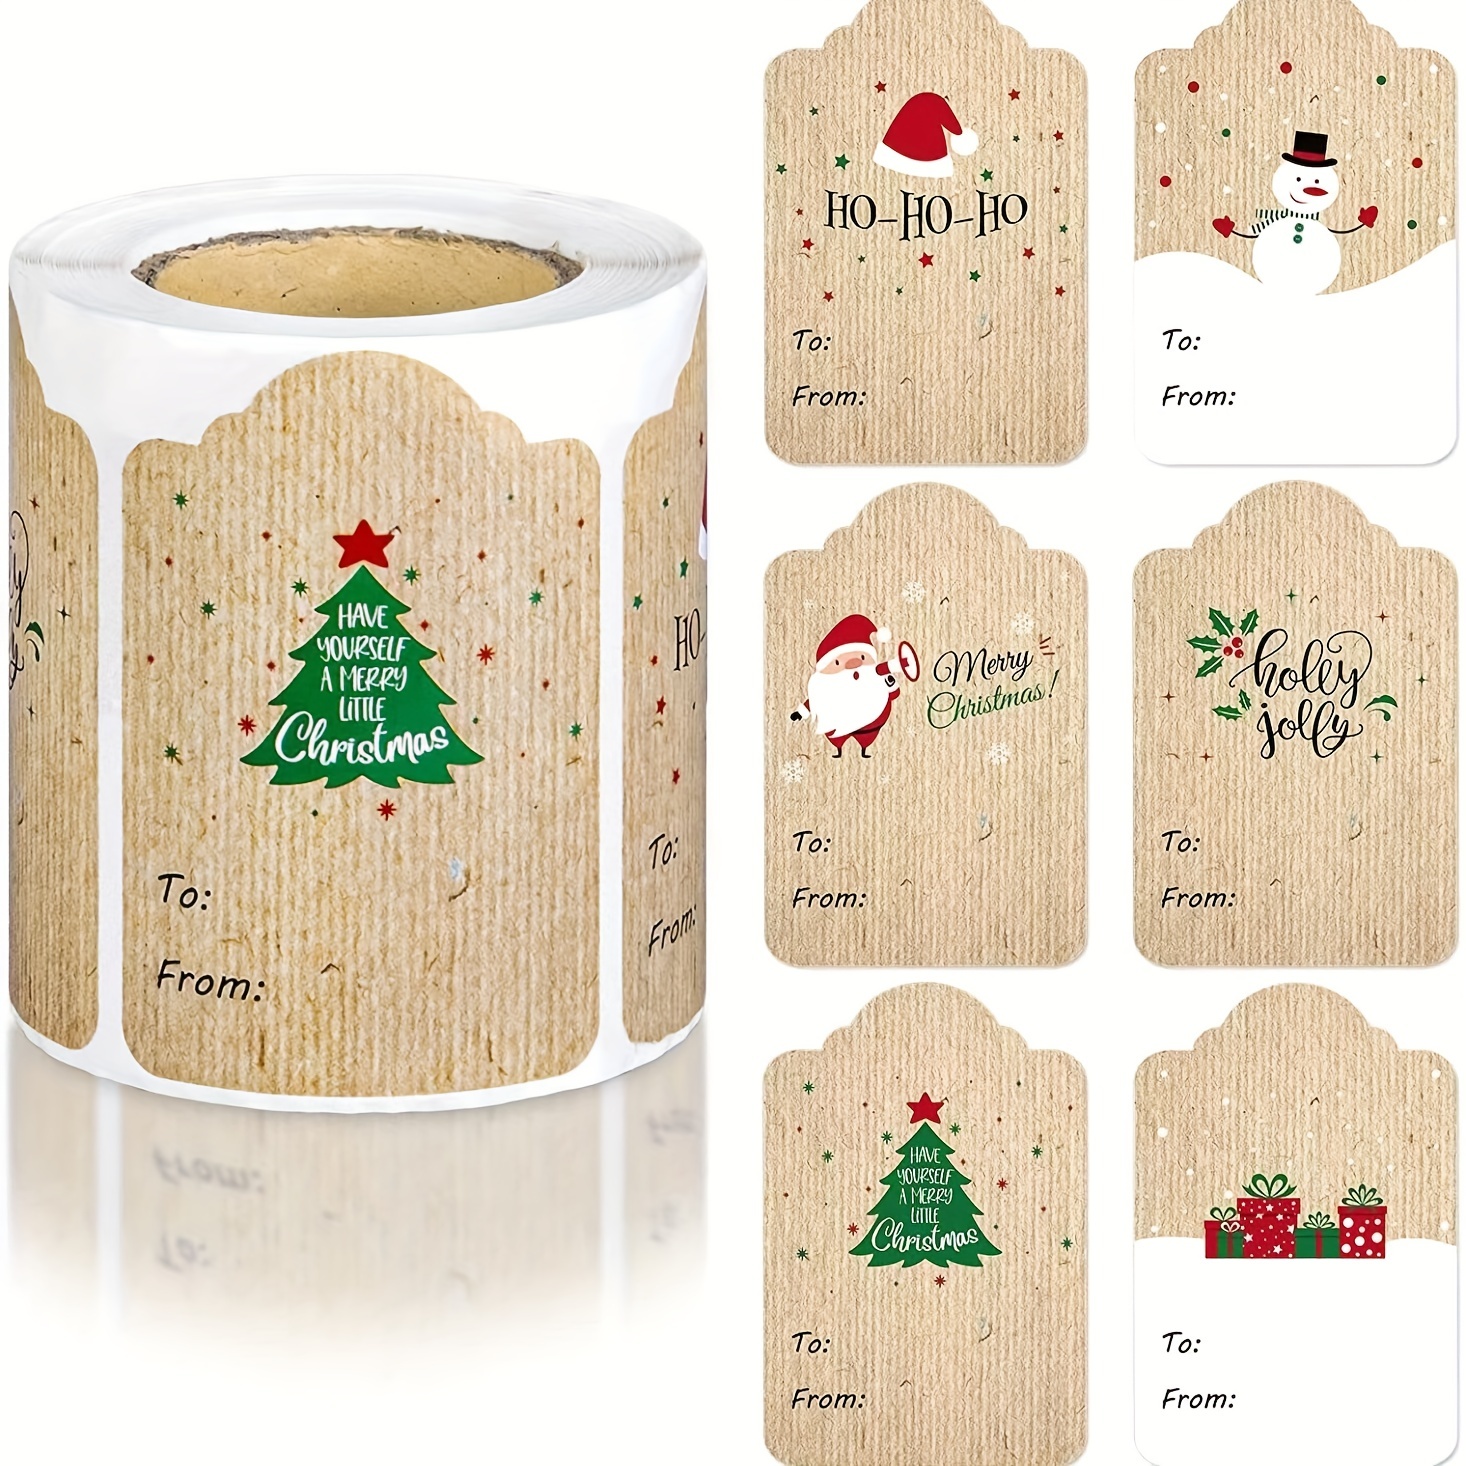 

300pcs/roll Christmas Tags, Christmas Santa Claus Stickers, Self-adhesive Tags Christmas Festival Birthday Holiday Gift Decor